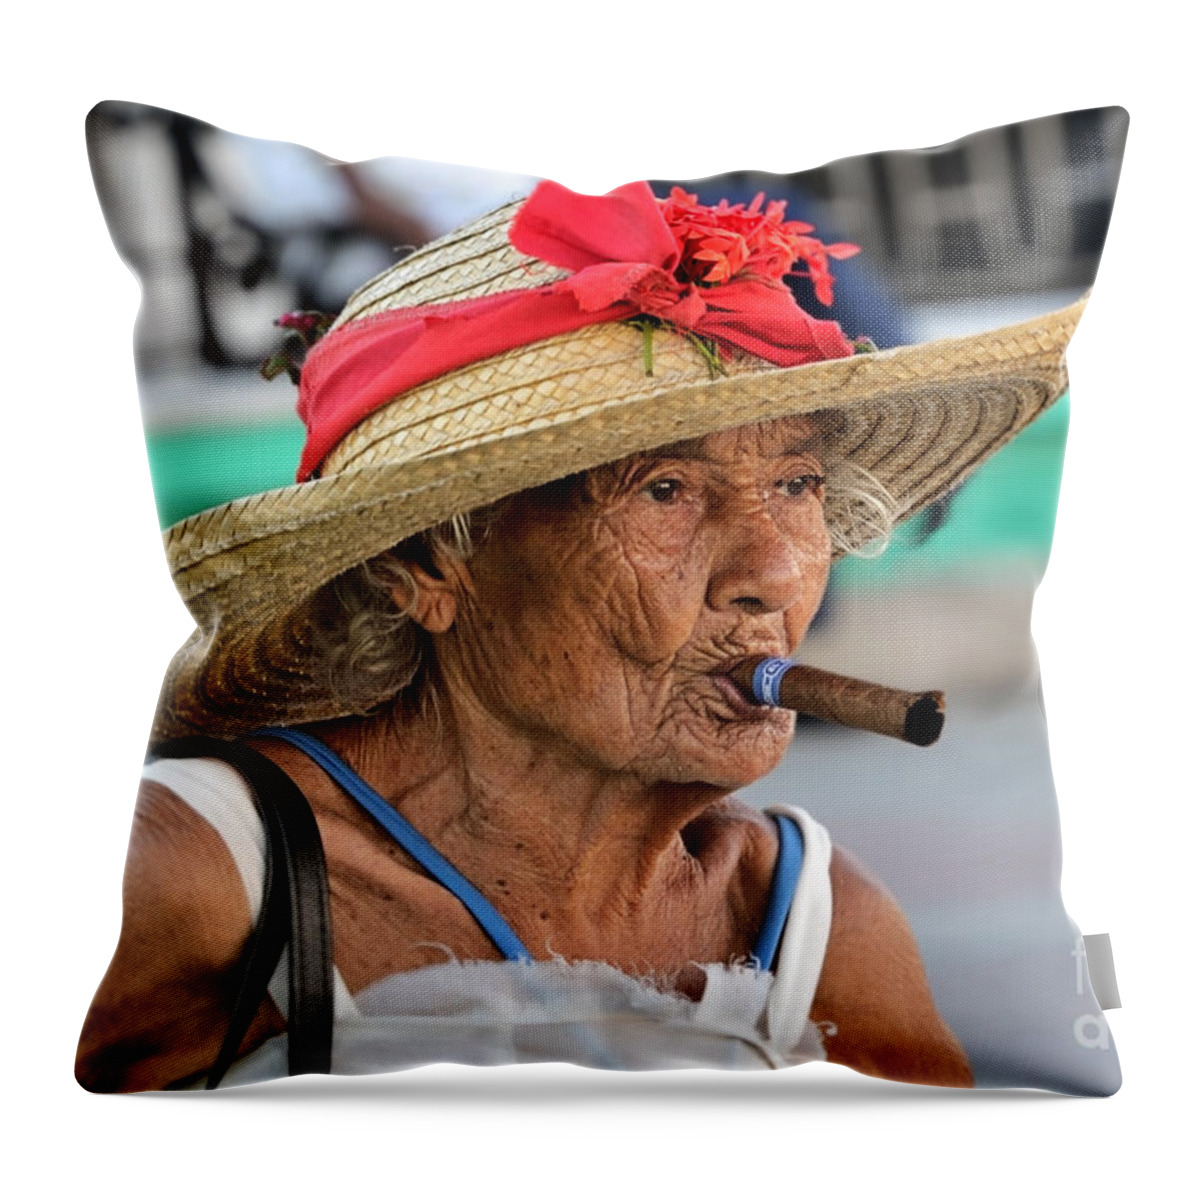 Cuba Throw Pillow featuring the photograph Cuban Lady by Jola Martysz